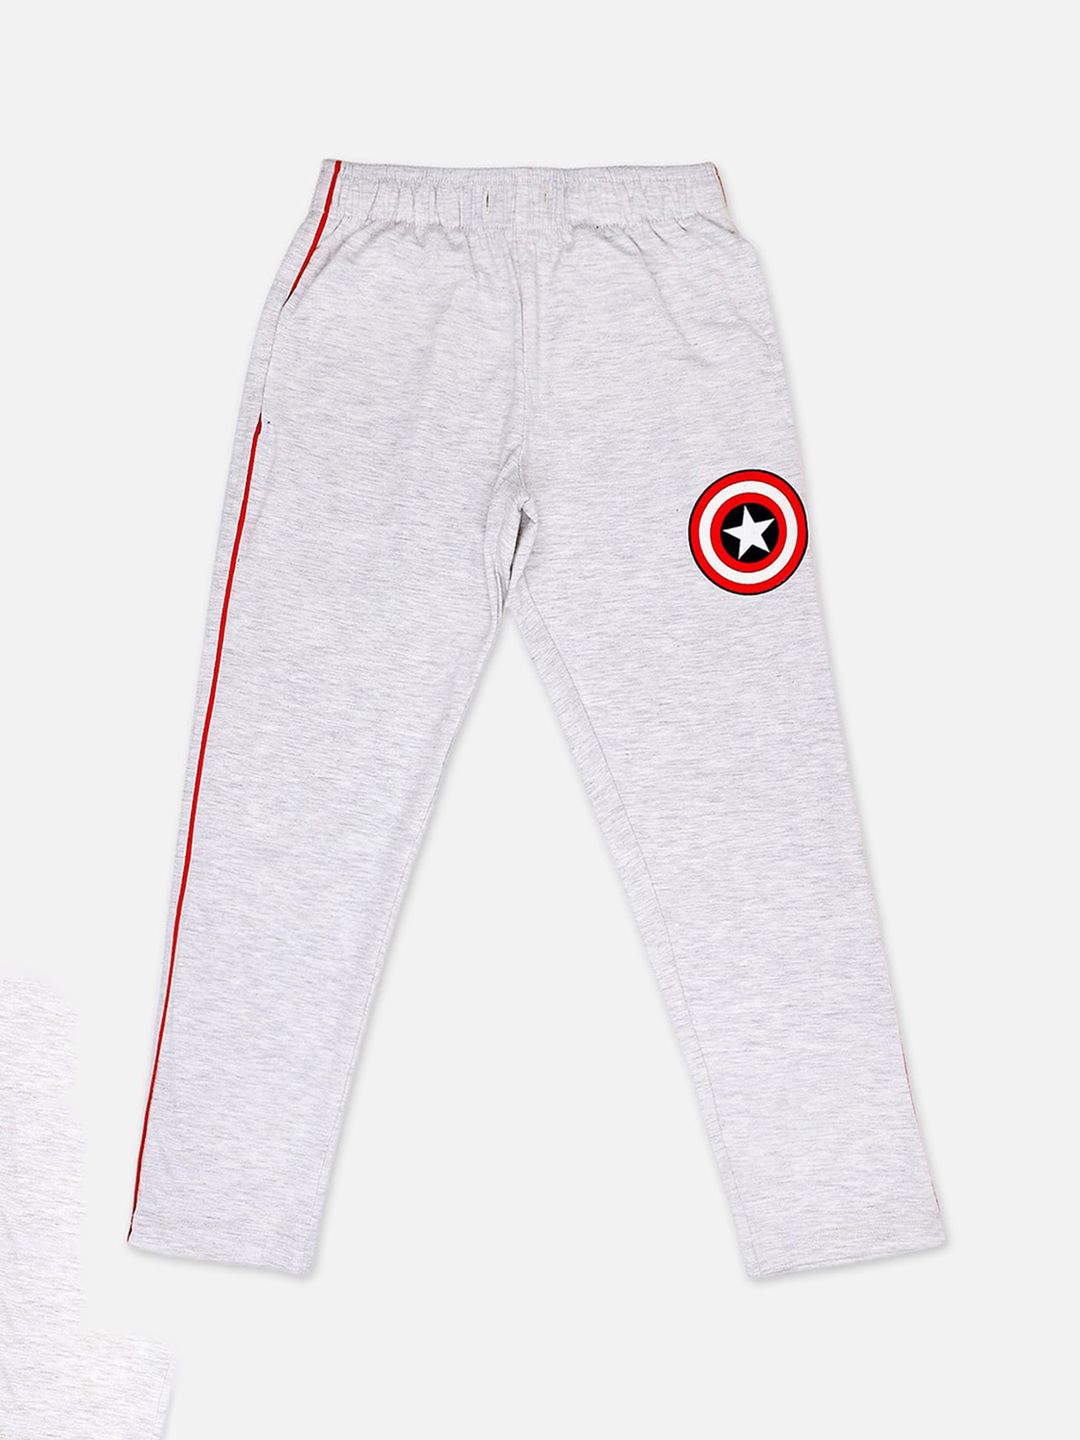 Marvel Mens Captain America Retro Allover Print Loungewear Pajama Pants  Small Blue at Amazon Mens Clothing store